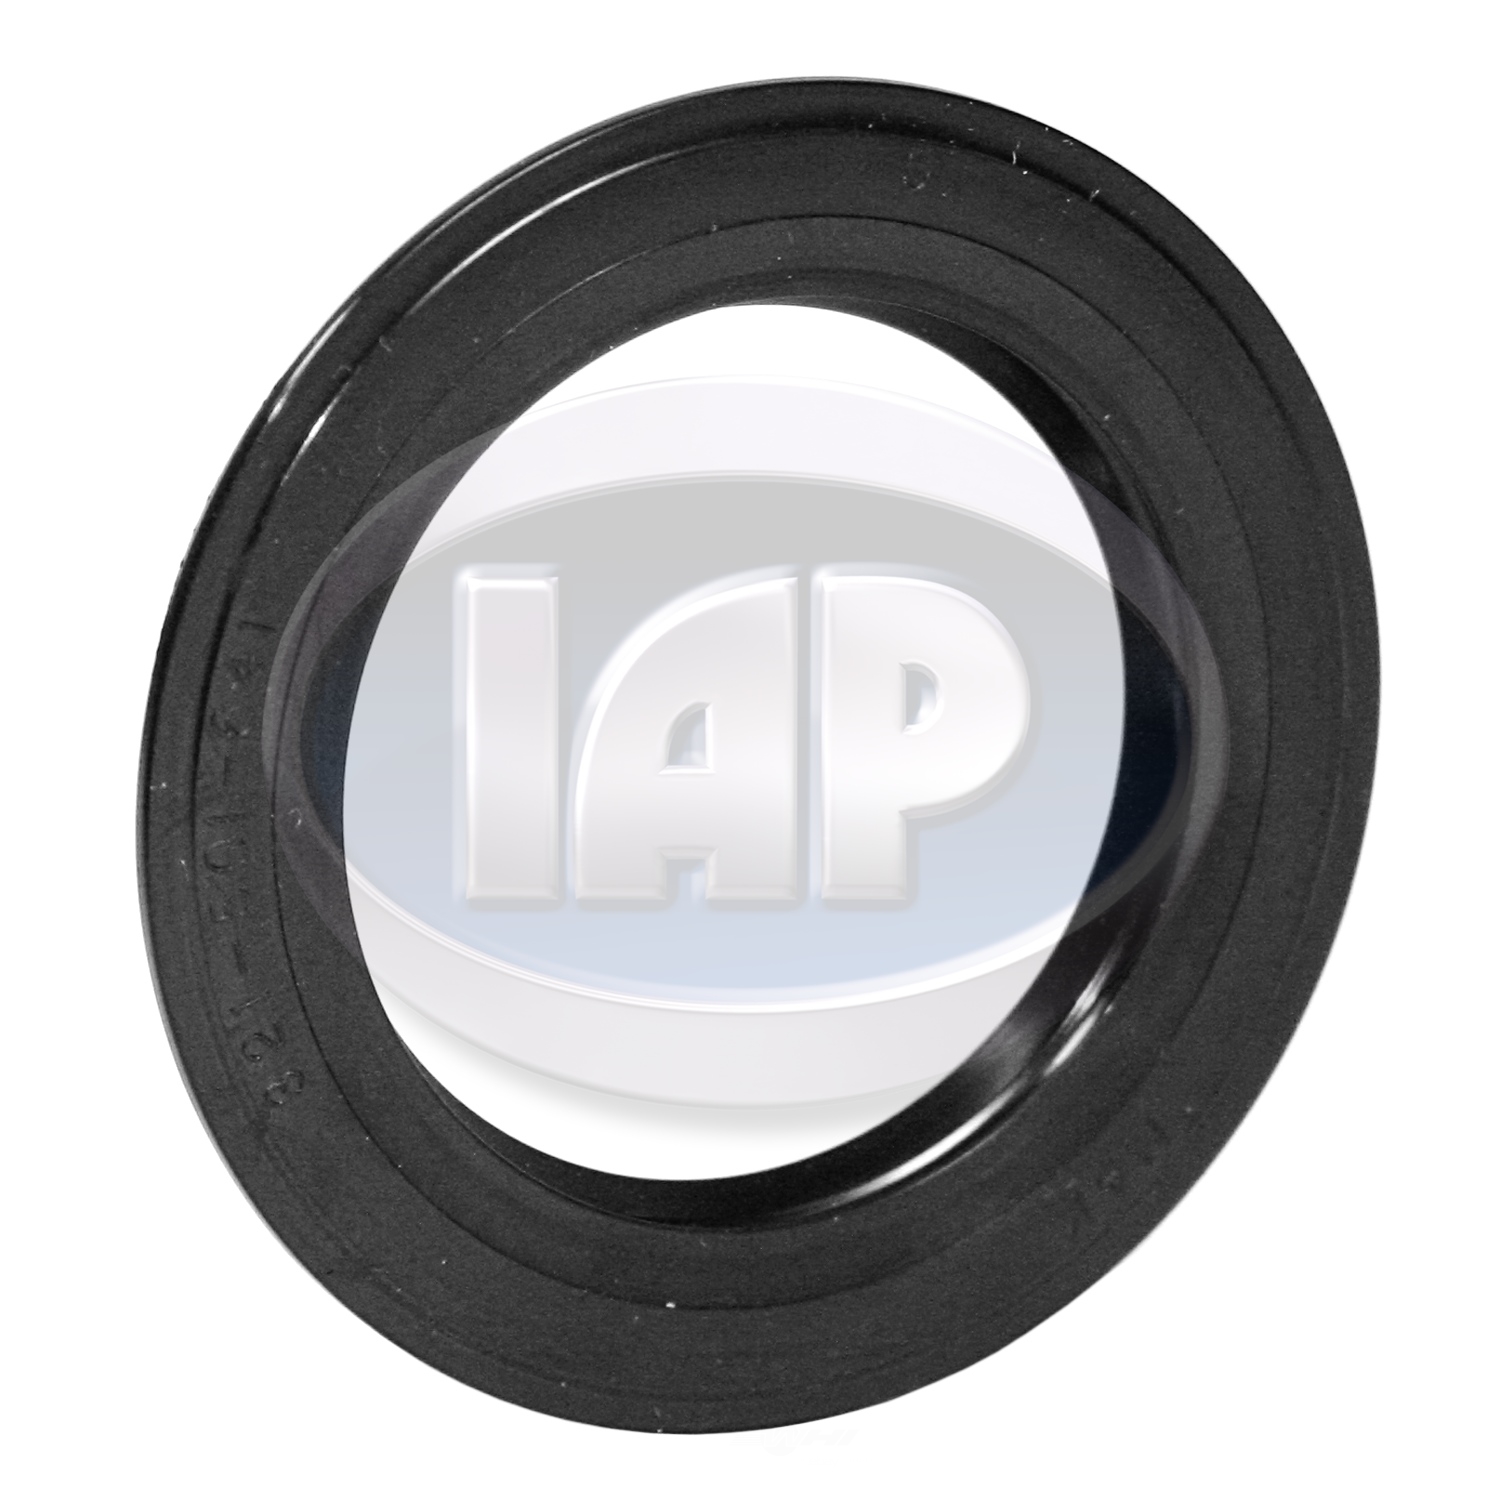 IAP/KUHLTEK MOTORWERKS - Wheel Seal (Front Right) - KMS 357501641B